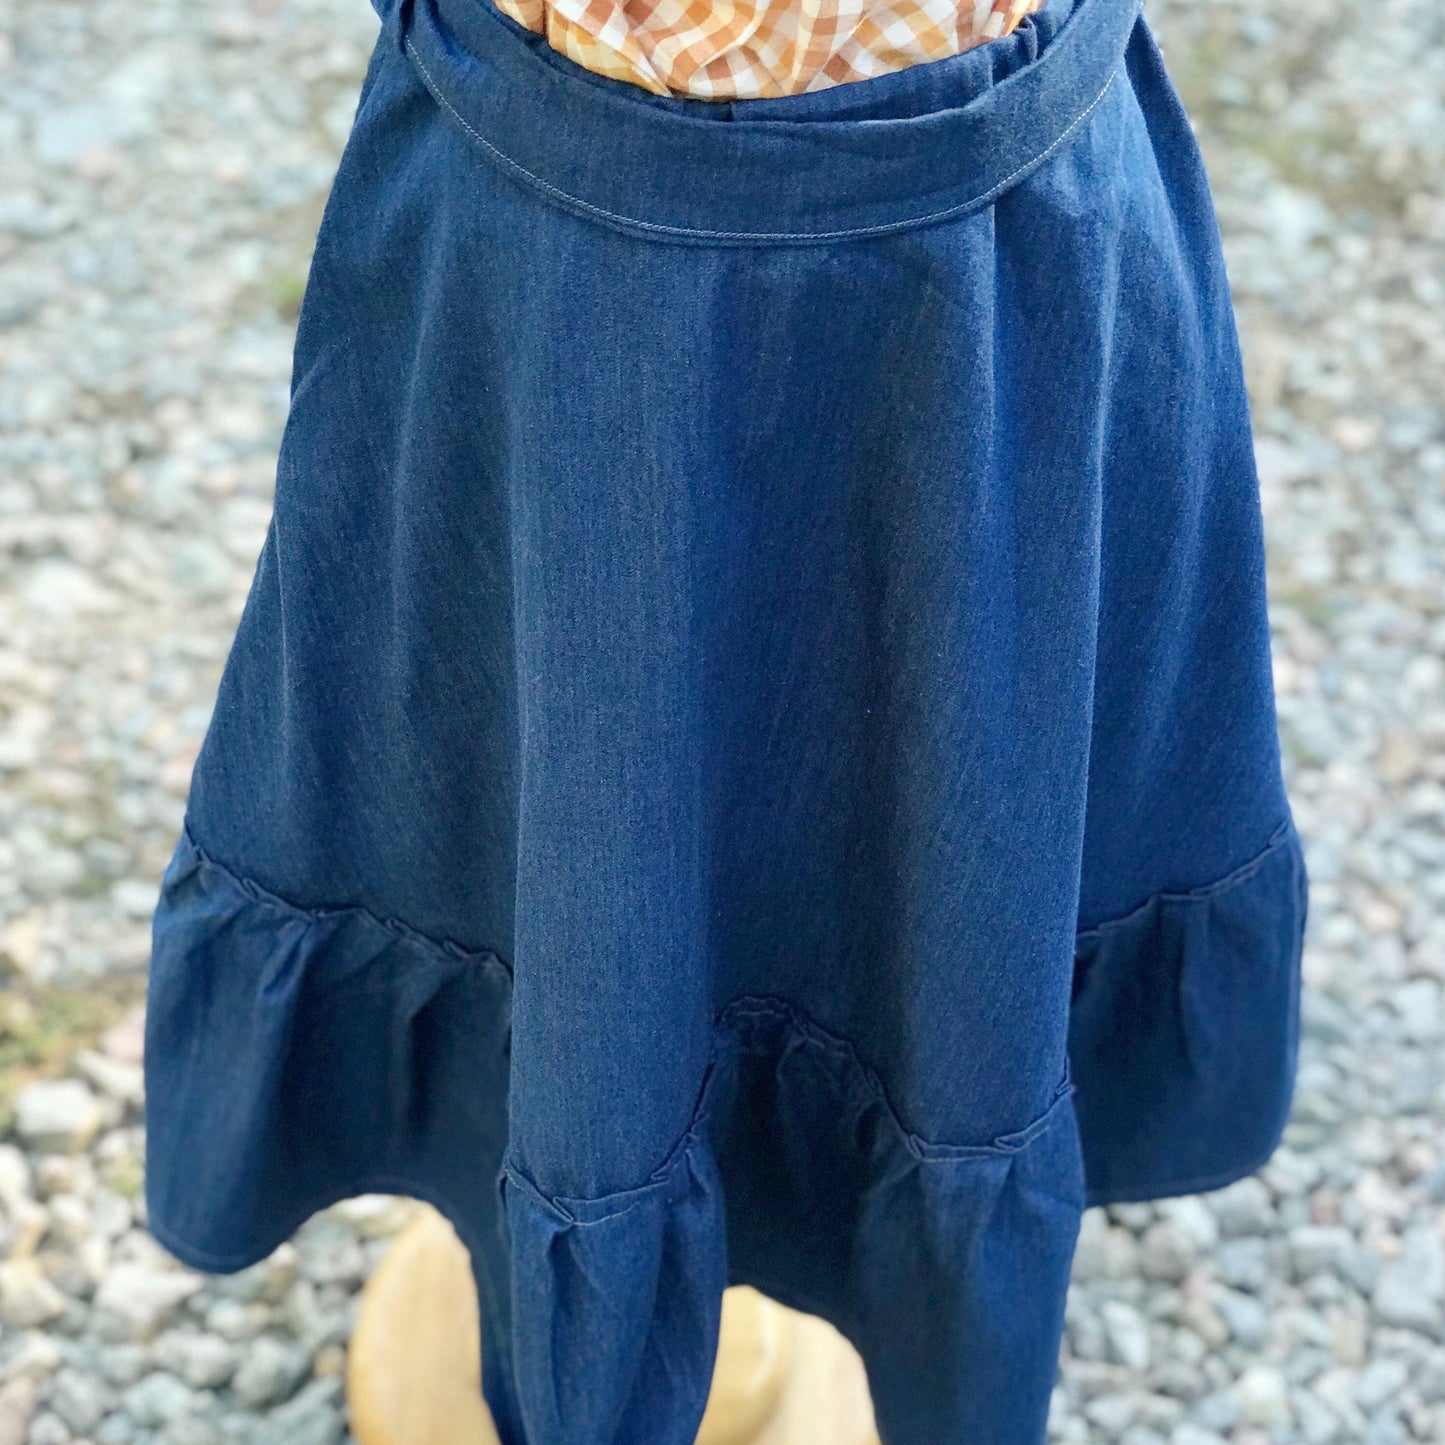 Denim Modern Prairie Skirt-Modesty n Mind-Girls' Clothing,Grow-with-me Clothing,Made to Order